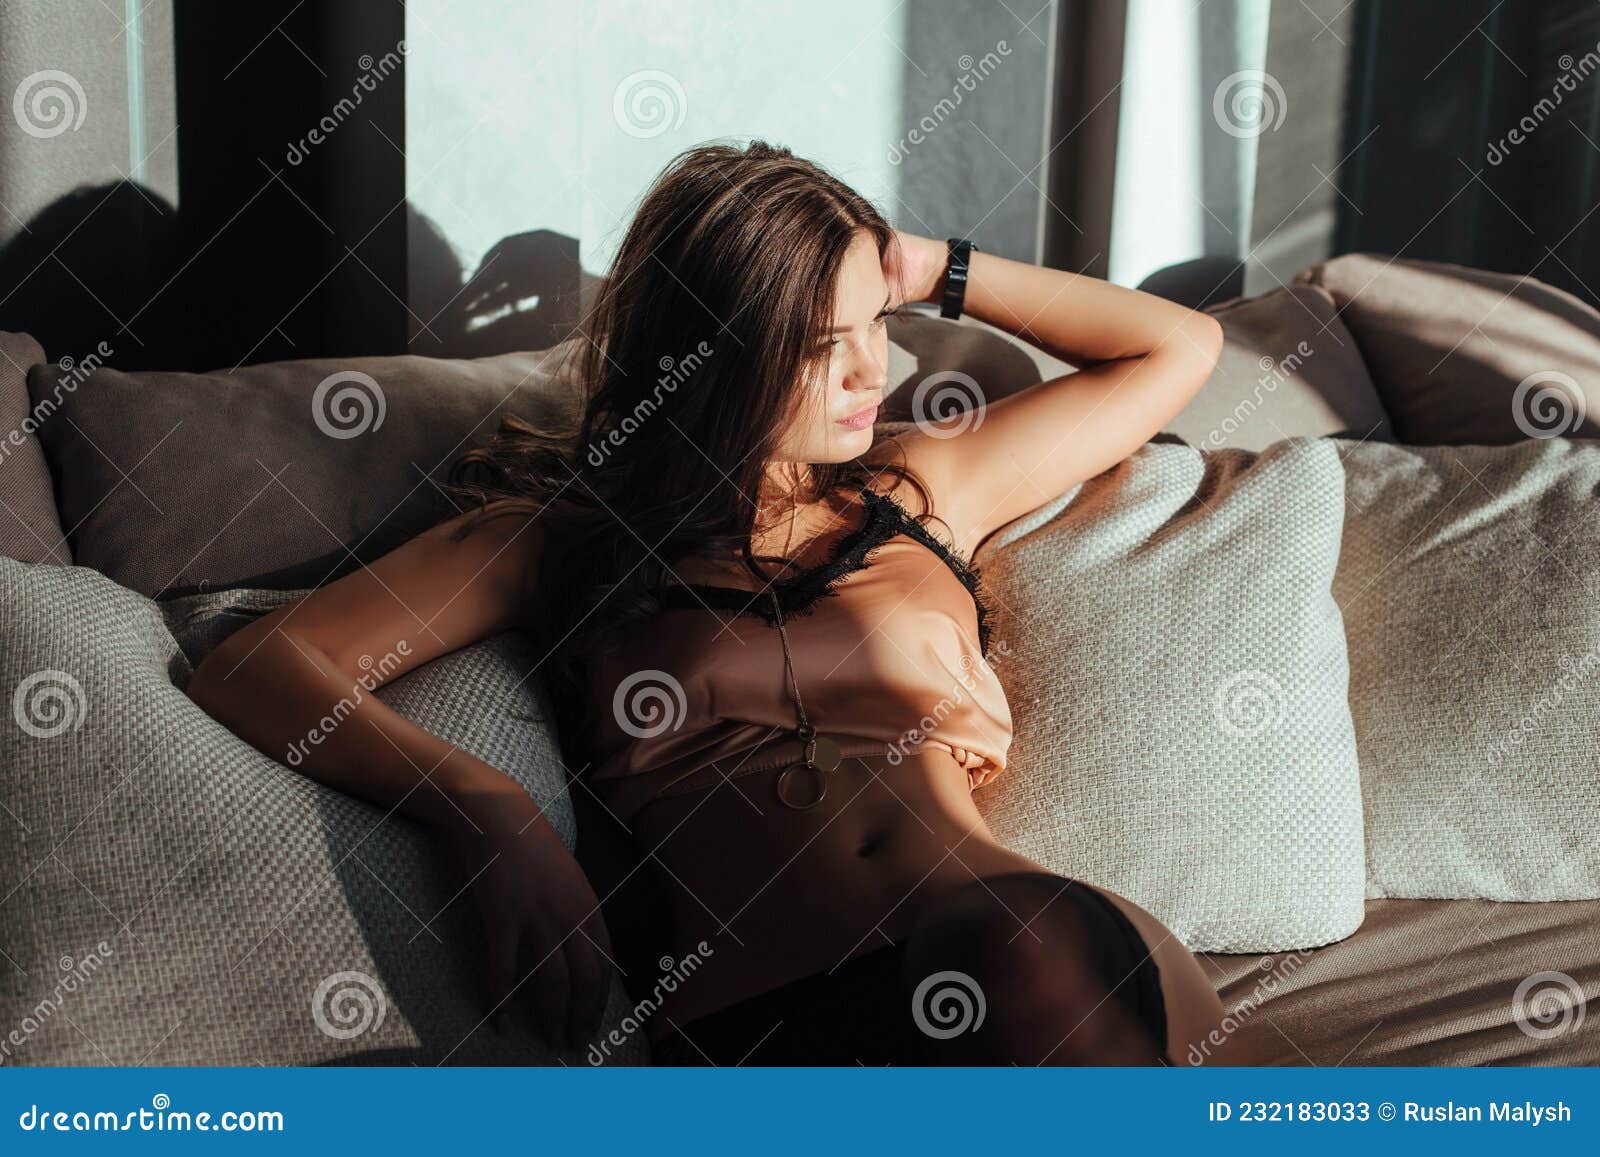 Brunette Woman Posing in Elegant Lingerie, Looking at Camera